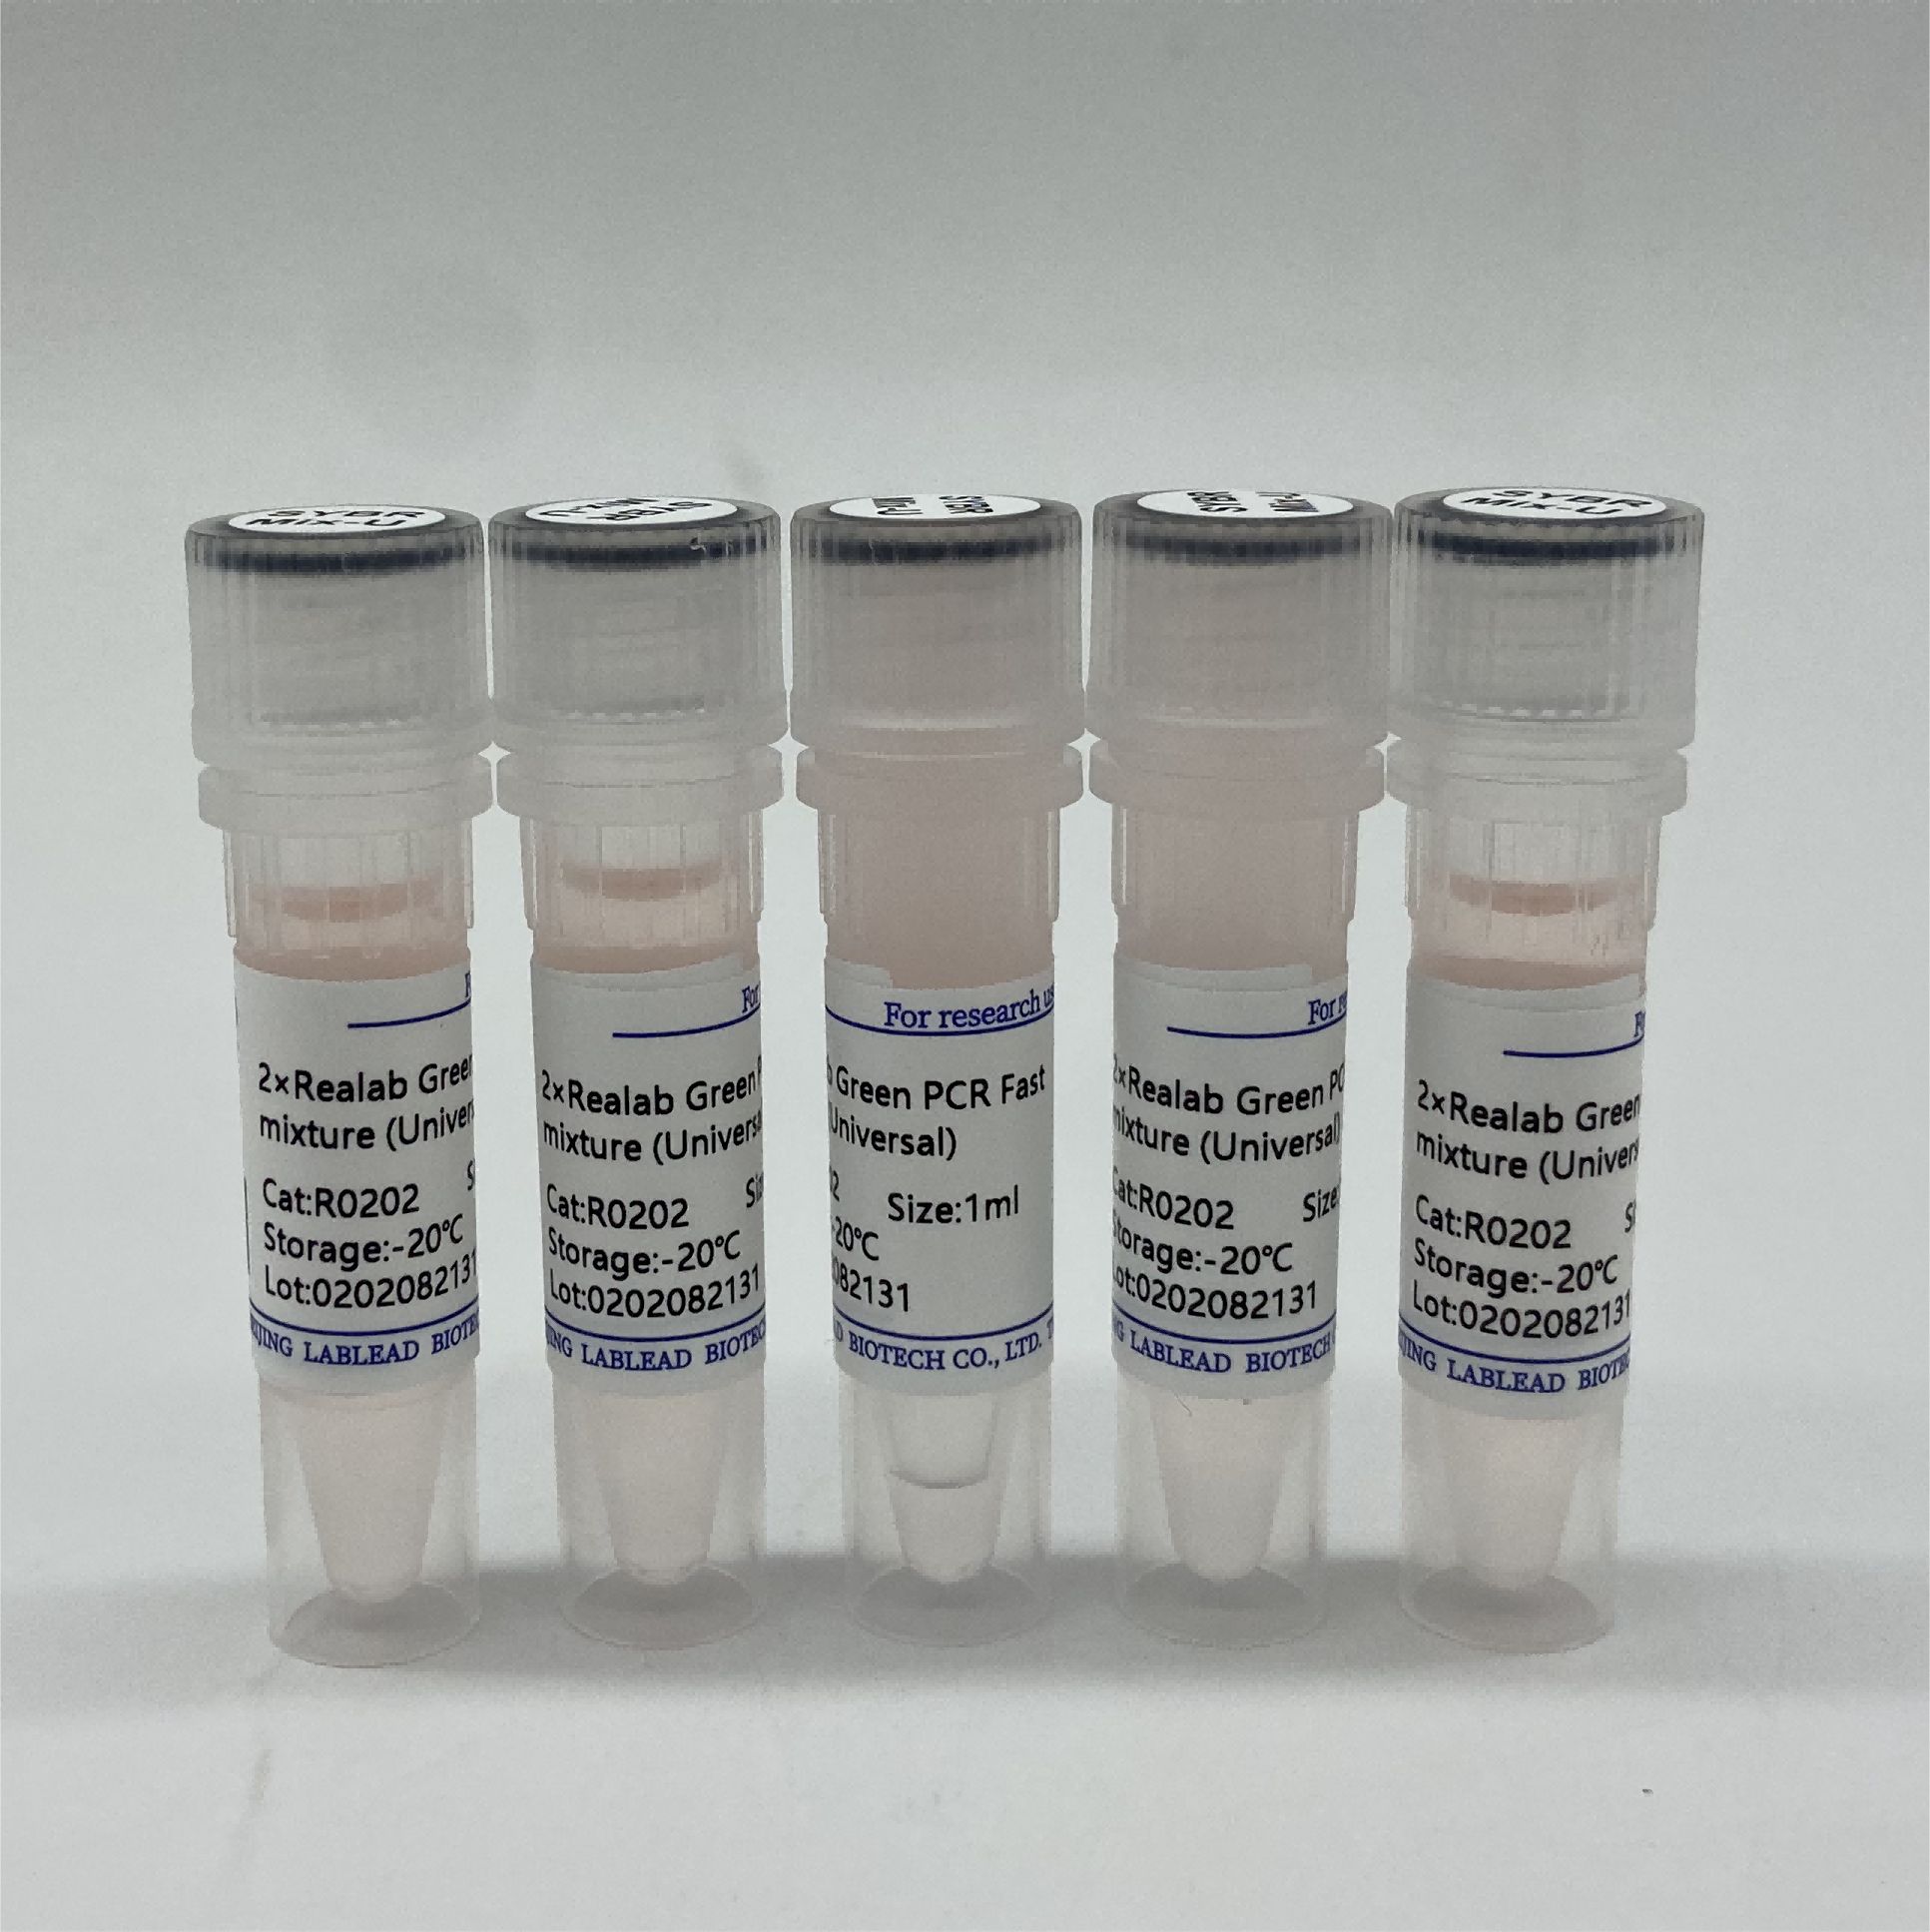 2x Realab Green PCR Fast mixture通用型